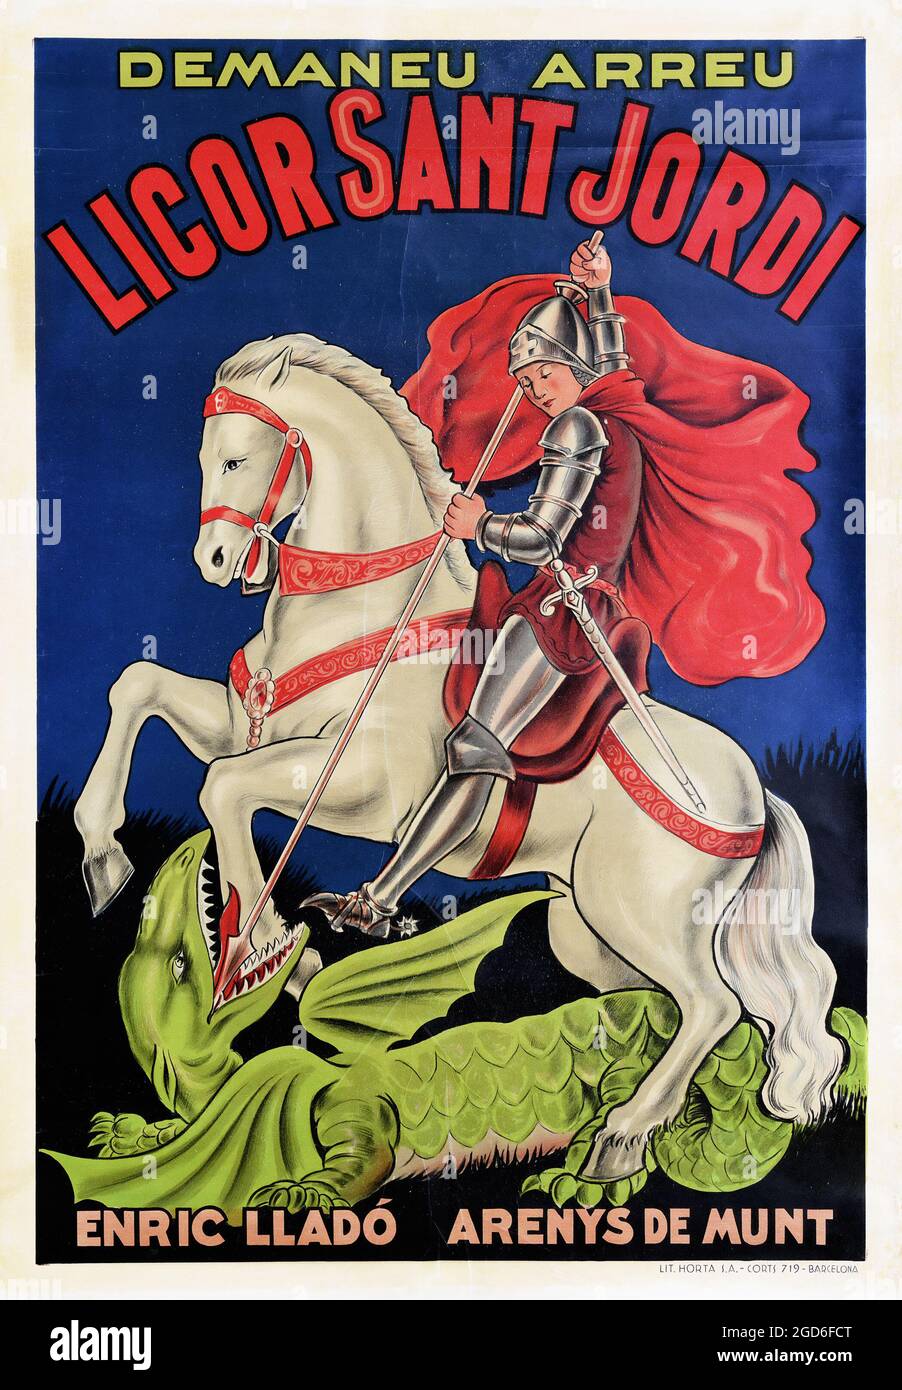 Old and vintage advertisement / poster. Demaneu Arreu Licor Sant Jordi. Enric Llado, Arensys de Munt. 1930. Unknown artist. Drink / alcohol poster. Stock Photo